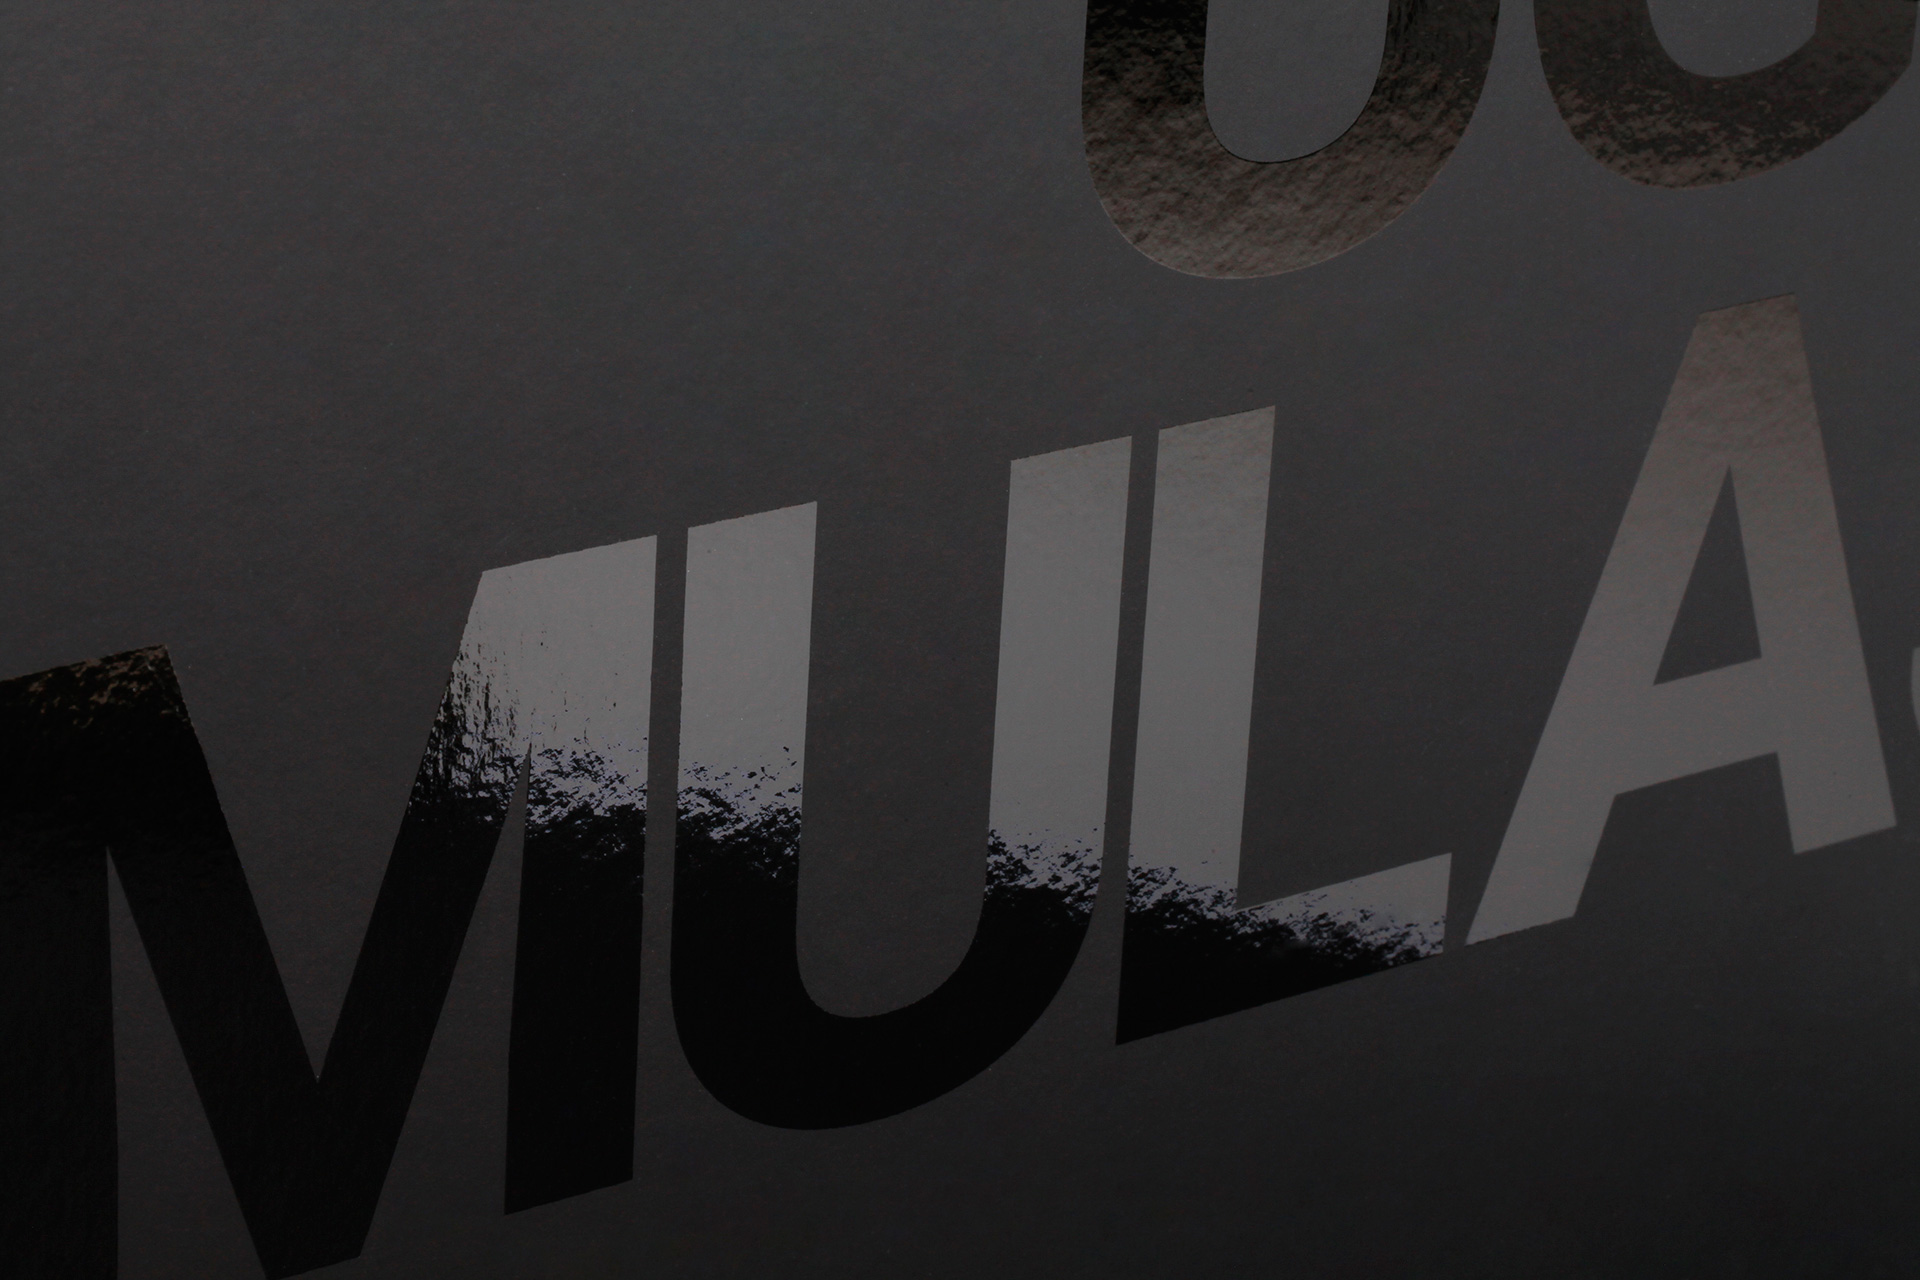 Ugo Mulas - Special Edition